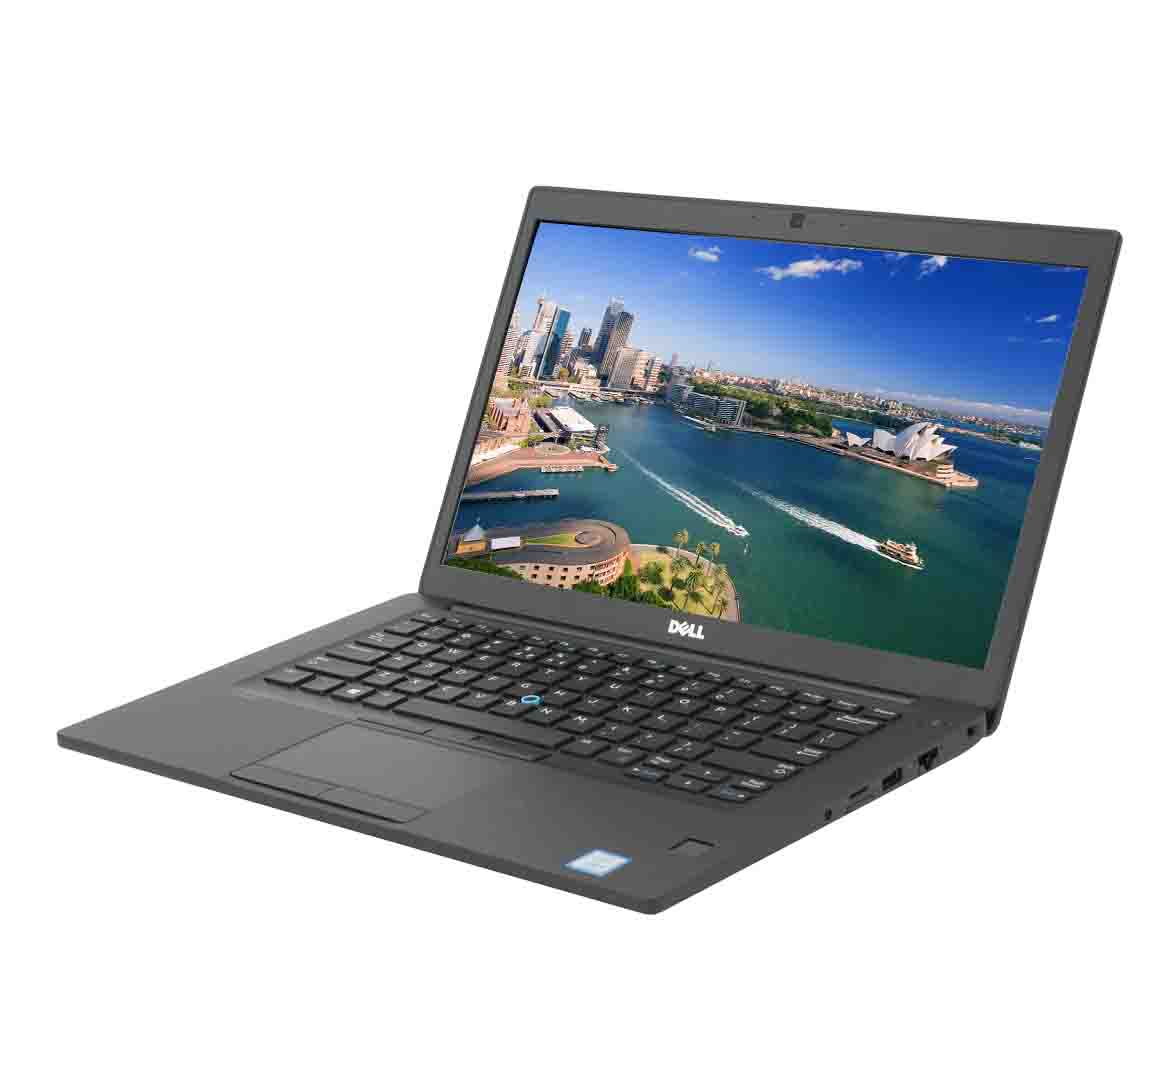 Dell Latitude 7480 Business Laptop, Intel Core i7-7th Generation CPU, 8GB RAM, 256GB SSD, 14.1 inch Display, Windows 10 Pro